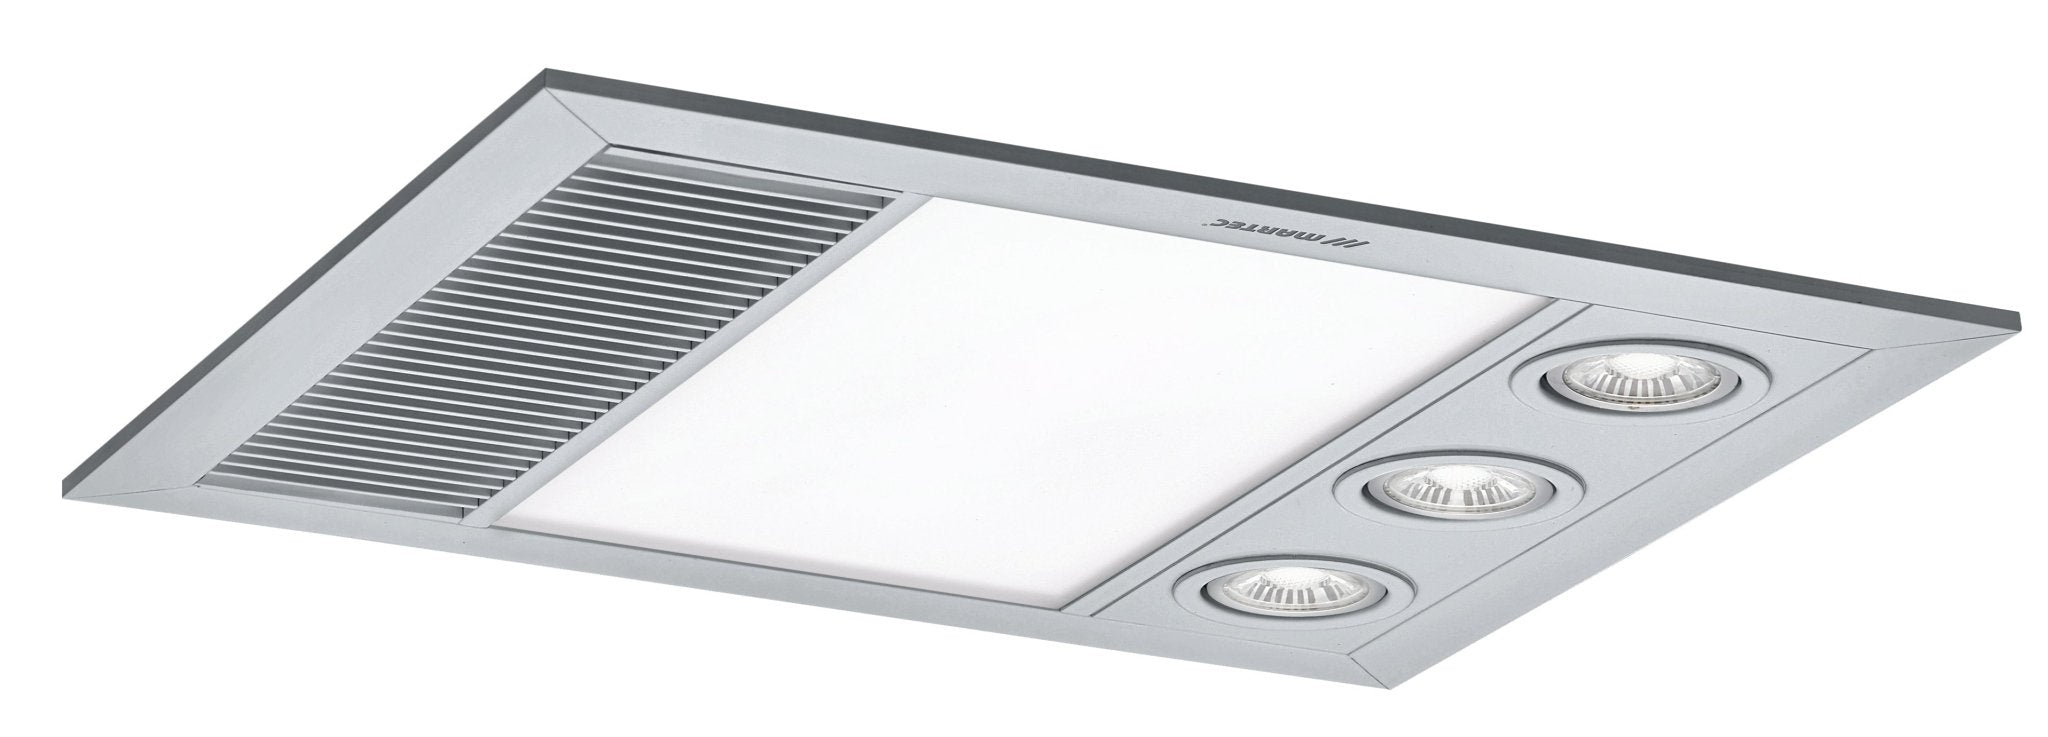 Martec 480m³/h Linear MINI 3 in 1 Bathroom Heater / Exhaust Fan & LED Light in Silver - MBHM1000 - Mases LightingMartec